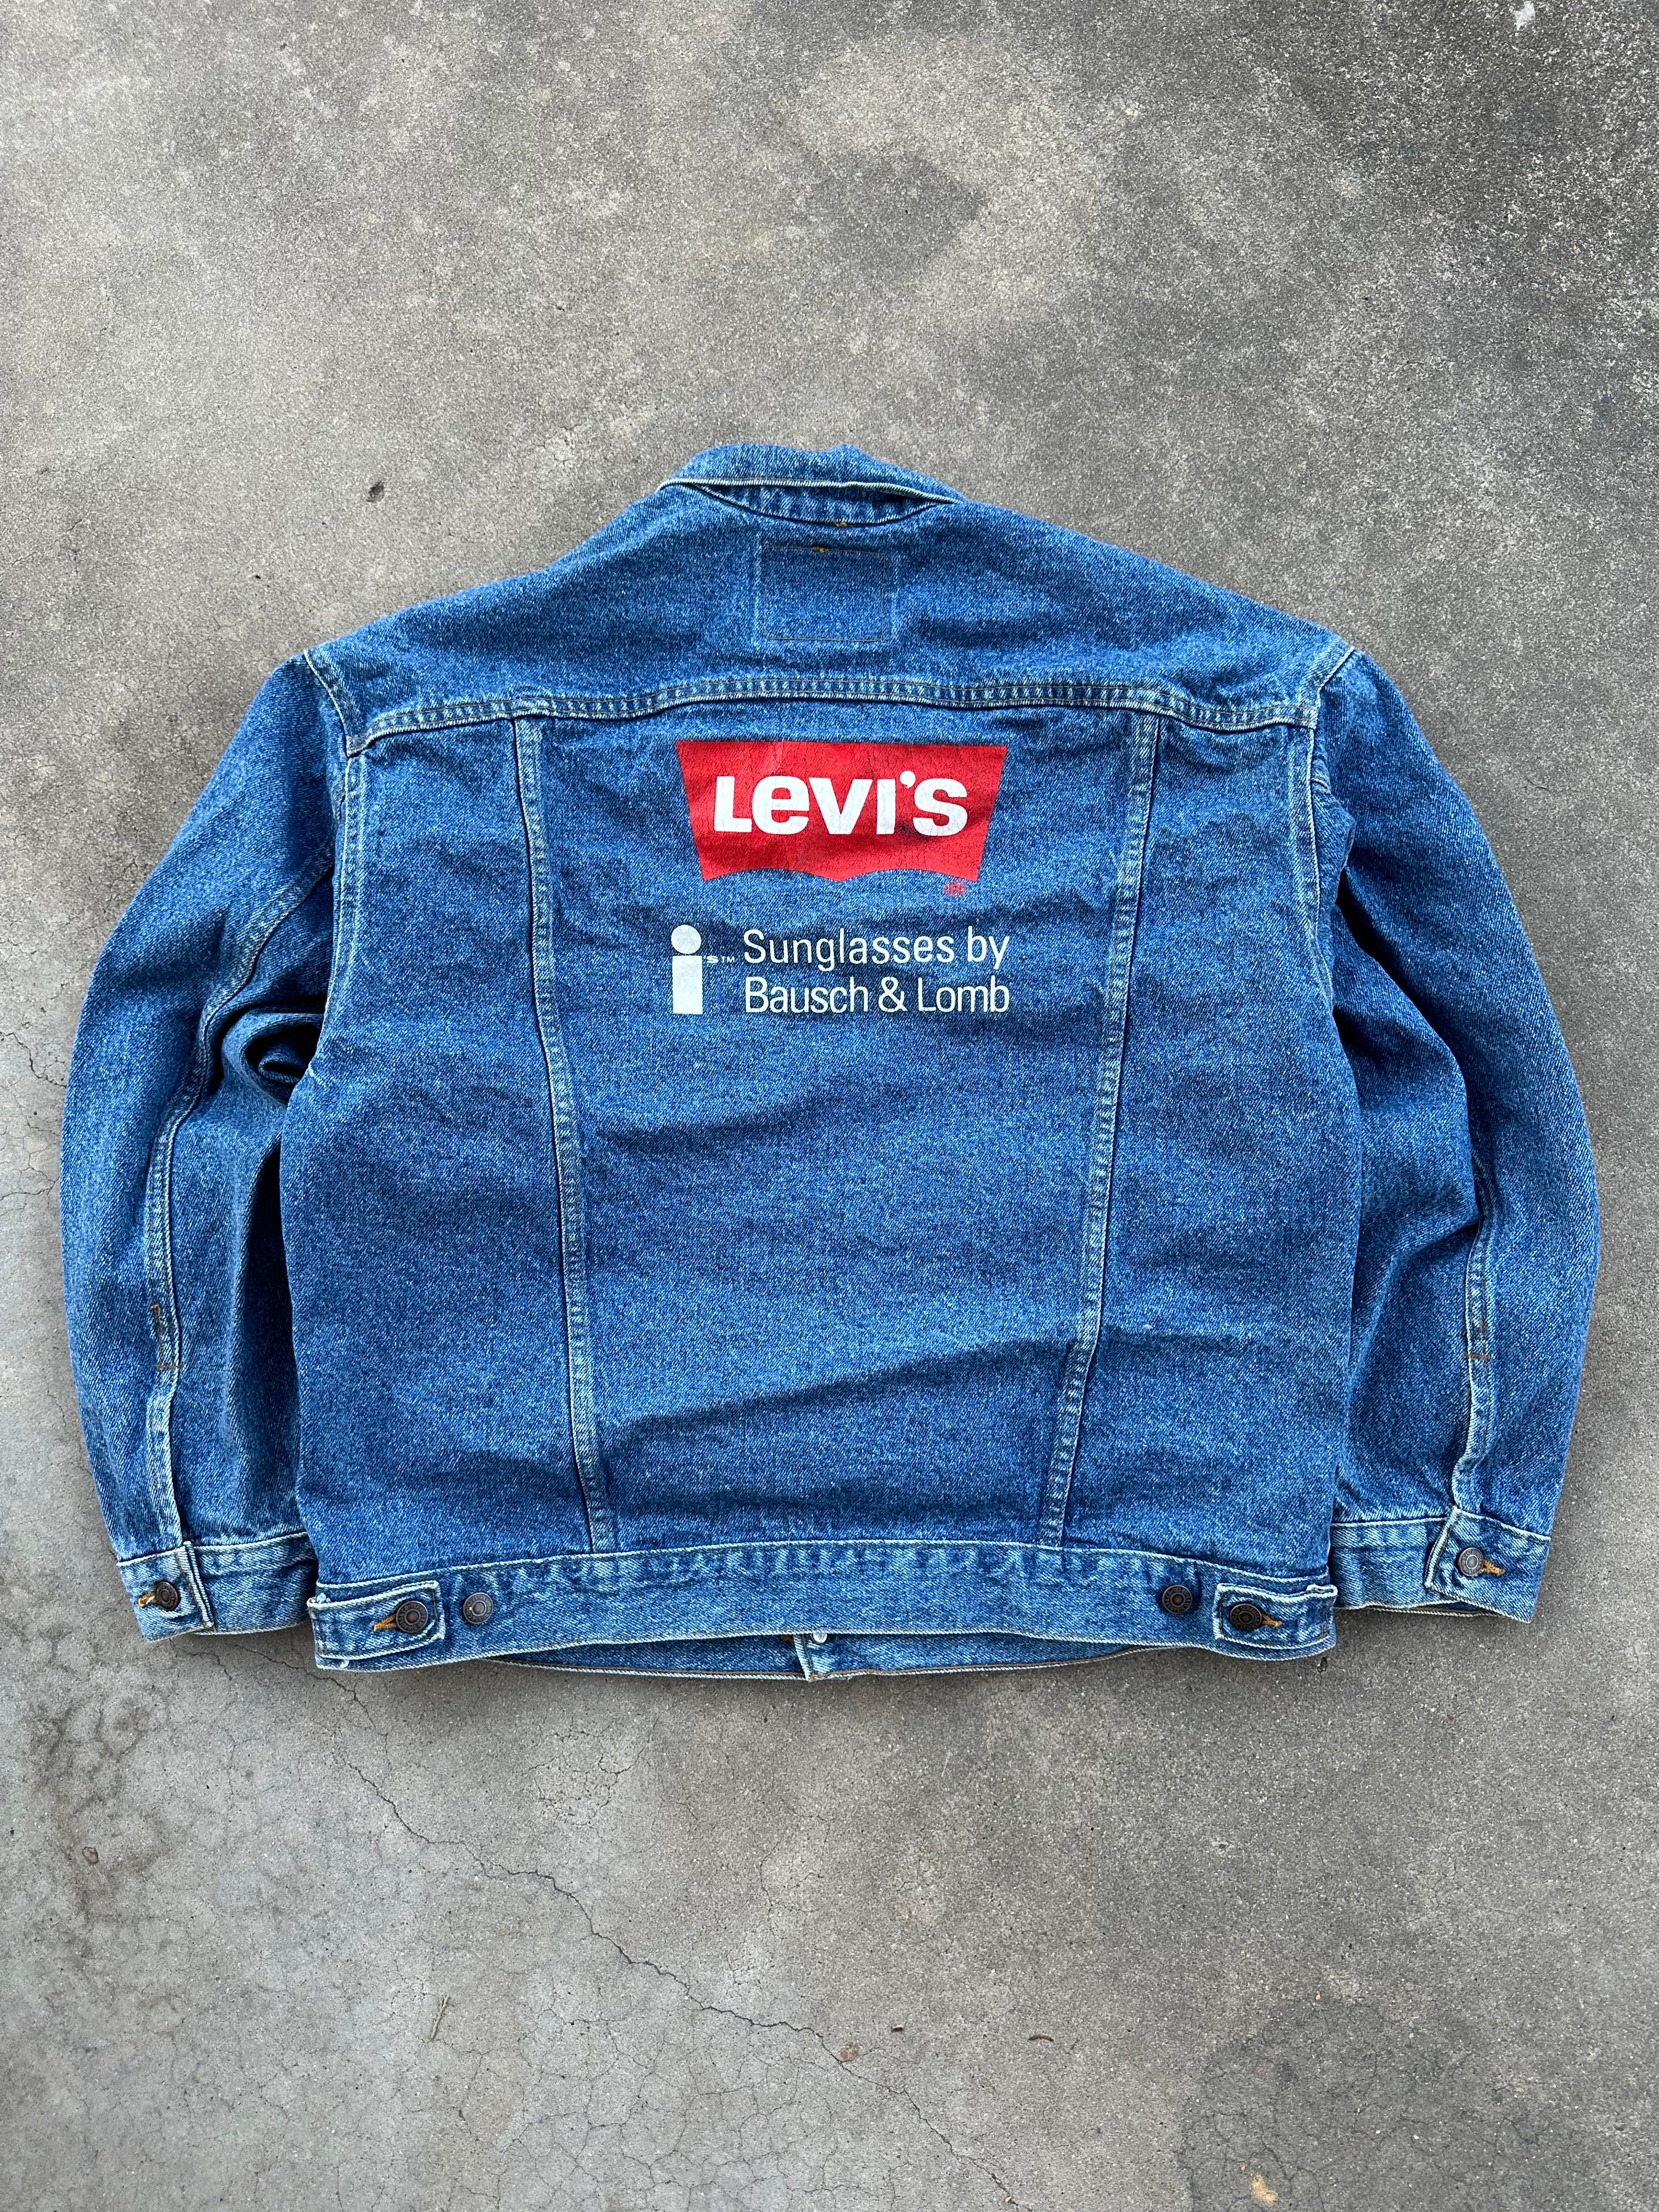 1990s Levi’s x Bausch & Lomb Denim Jacket (XL)